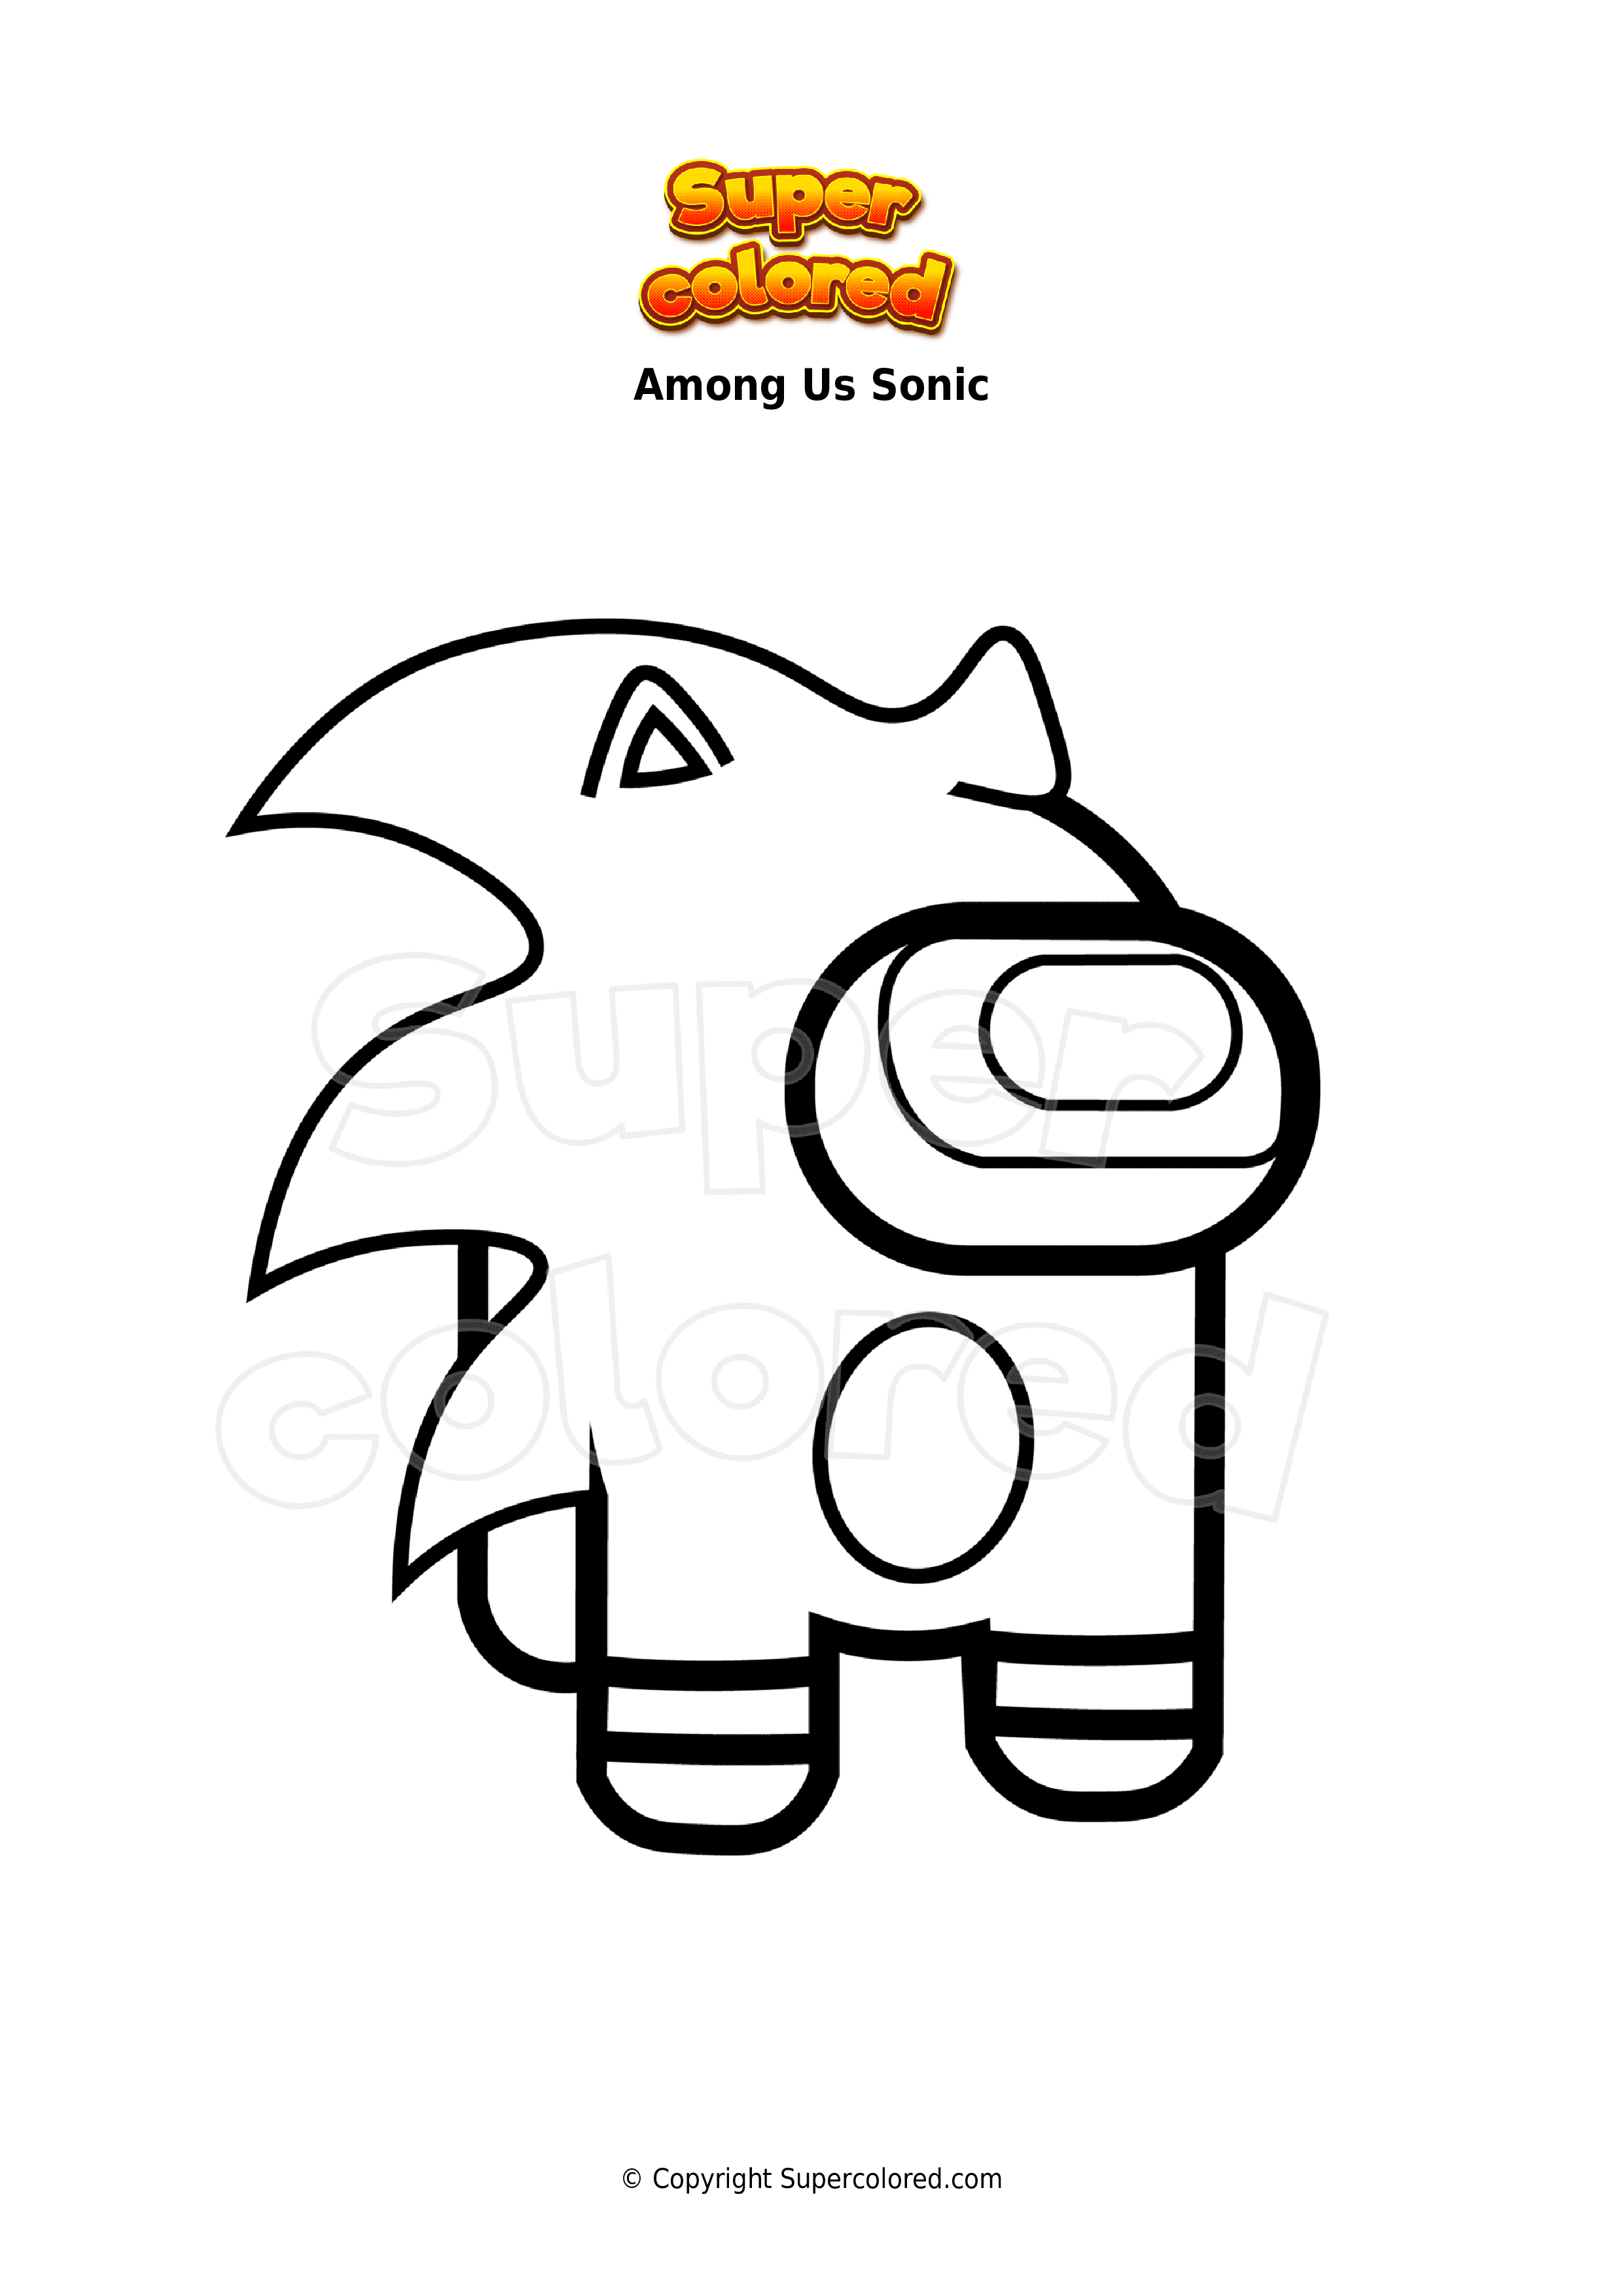 Dibujo para colorear Among Us Sonic - Supercolored.com